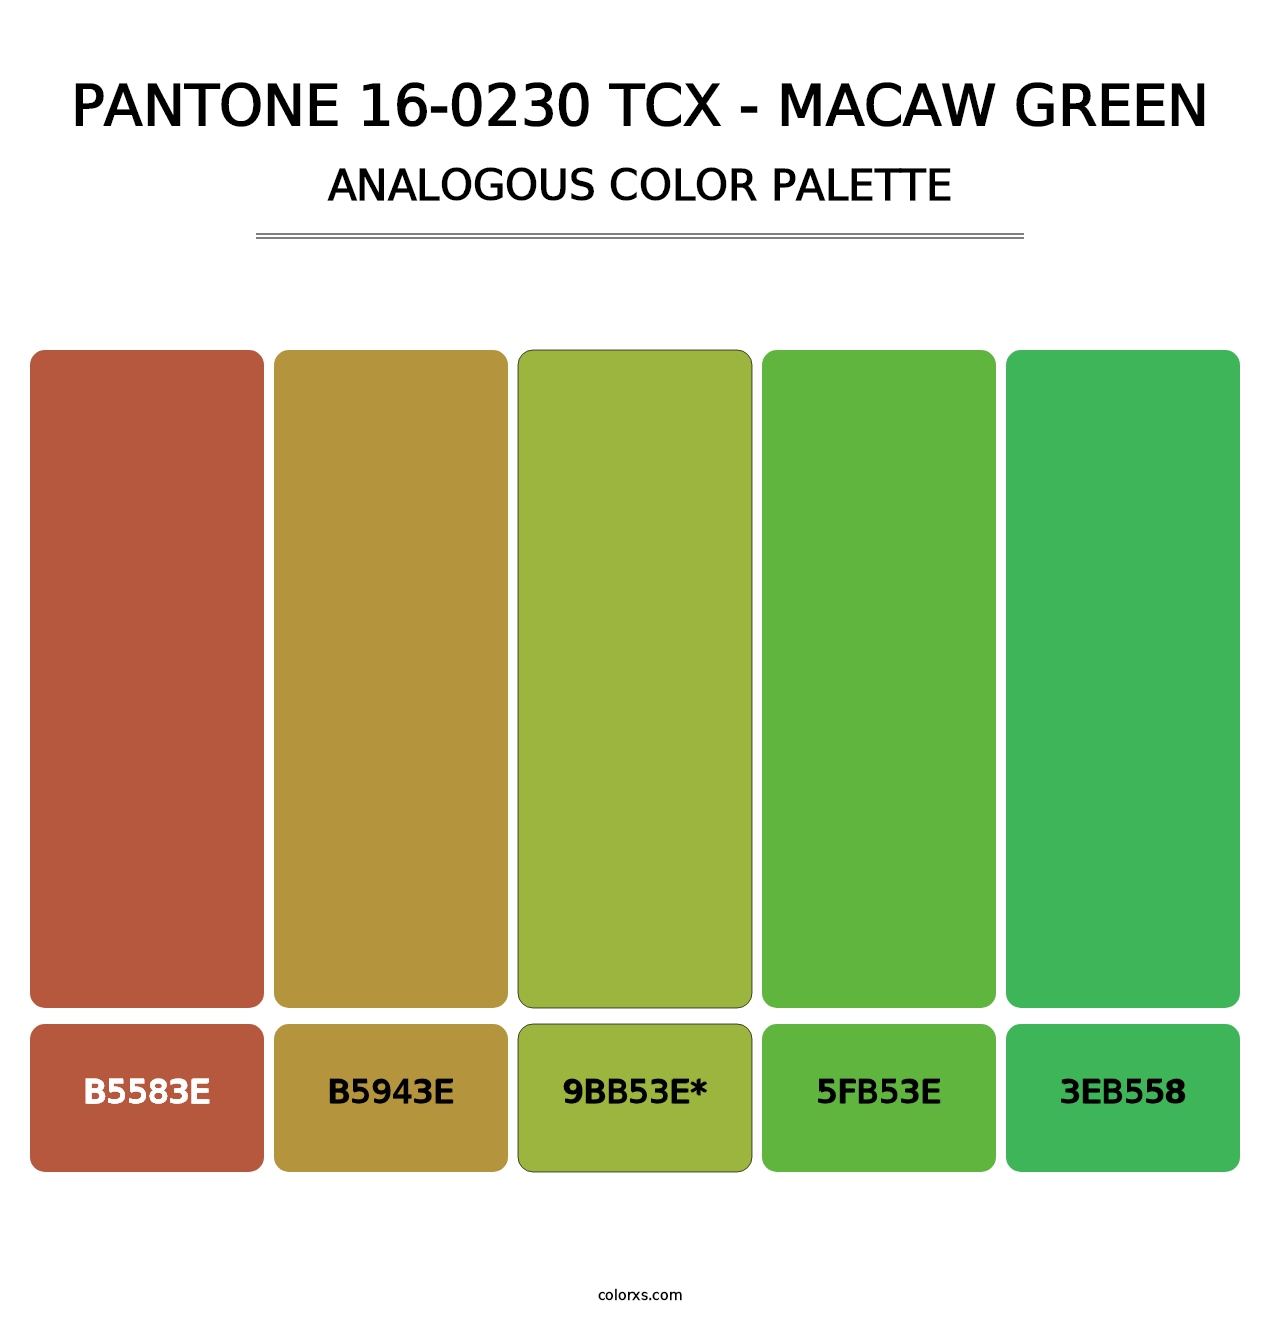 PANTONE 16-0230 TCX - Macaw Green - Analogous Color Palette